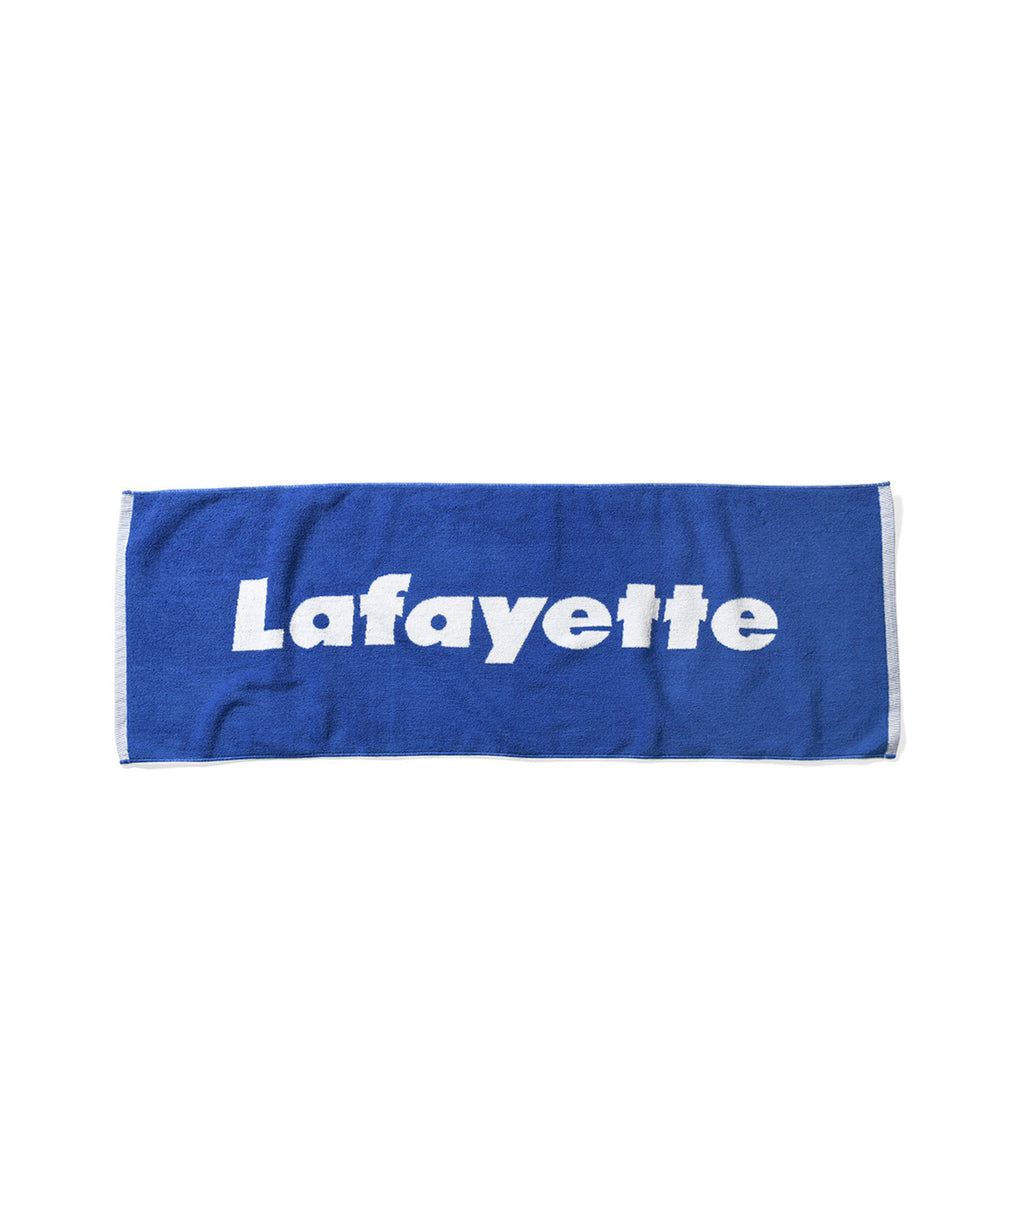 LFYT Lafayette LOGO JACQUARD TOWEL LS232304